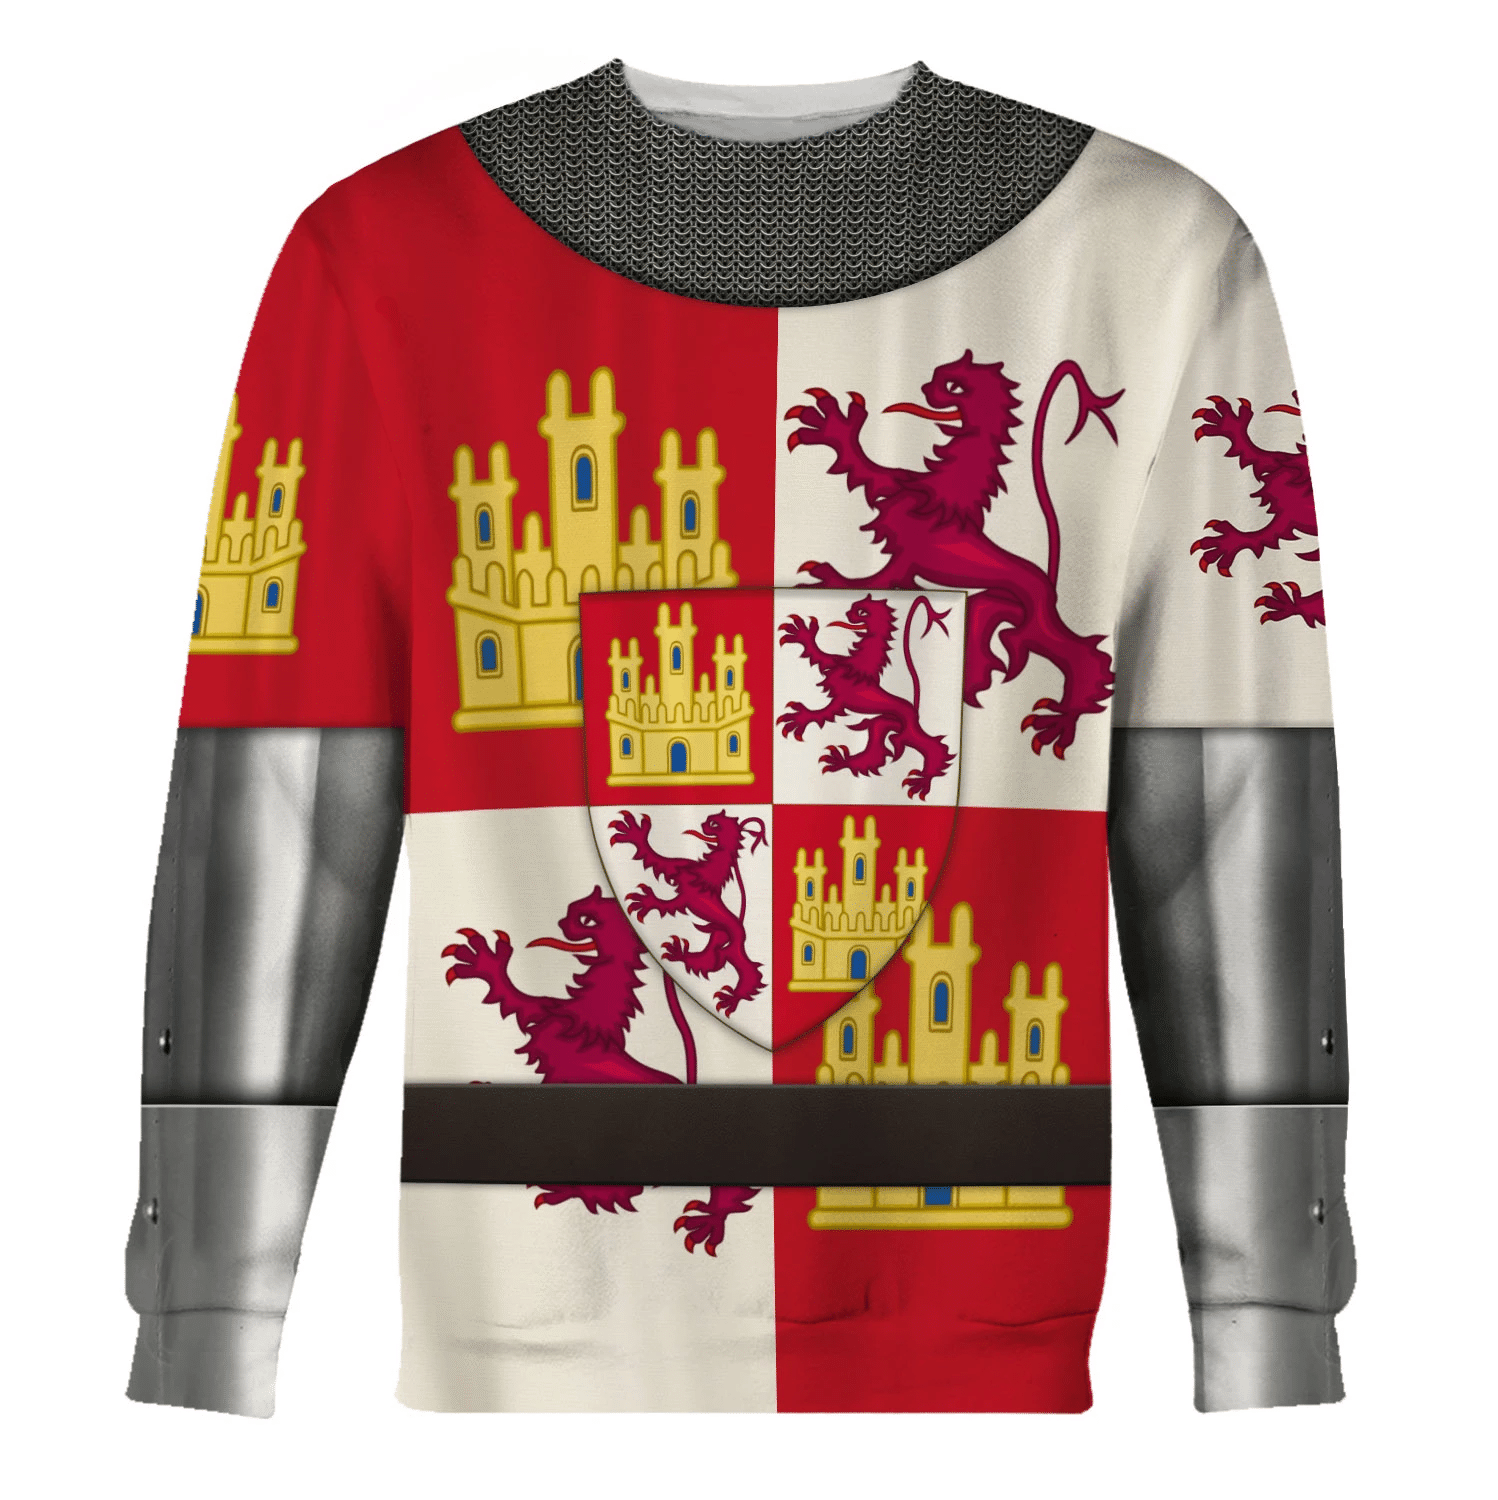 Castile And Leon Armor sweatshirt